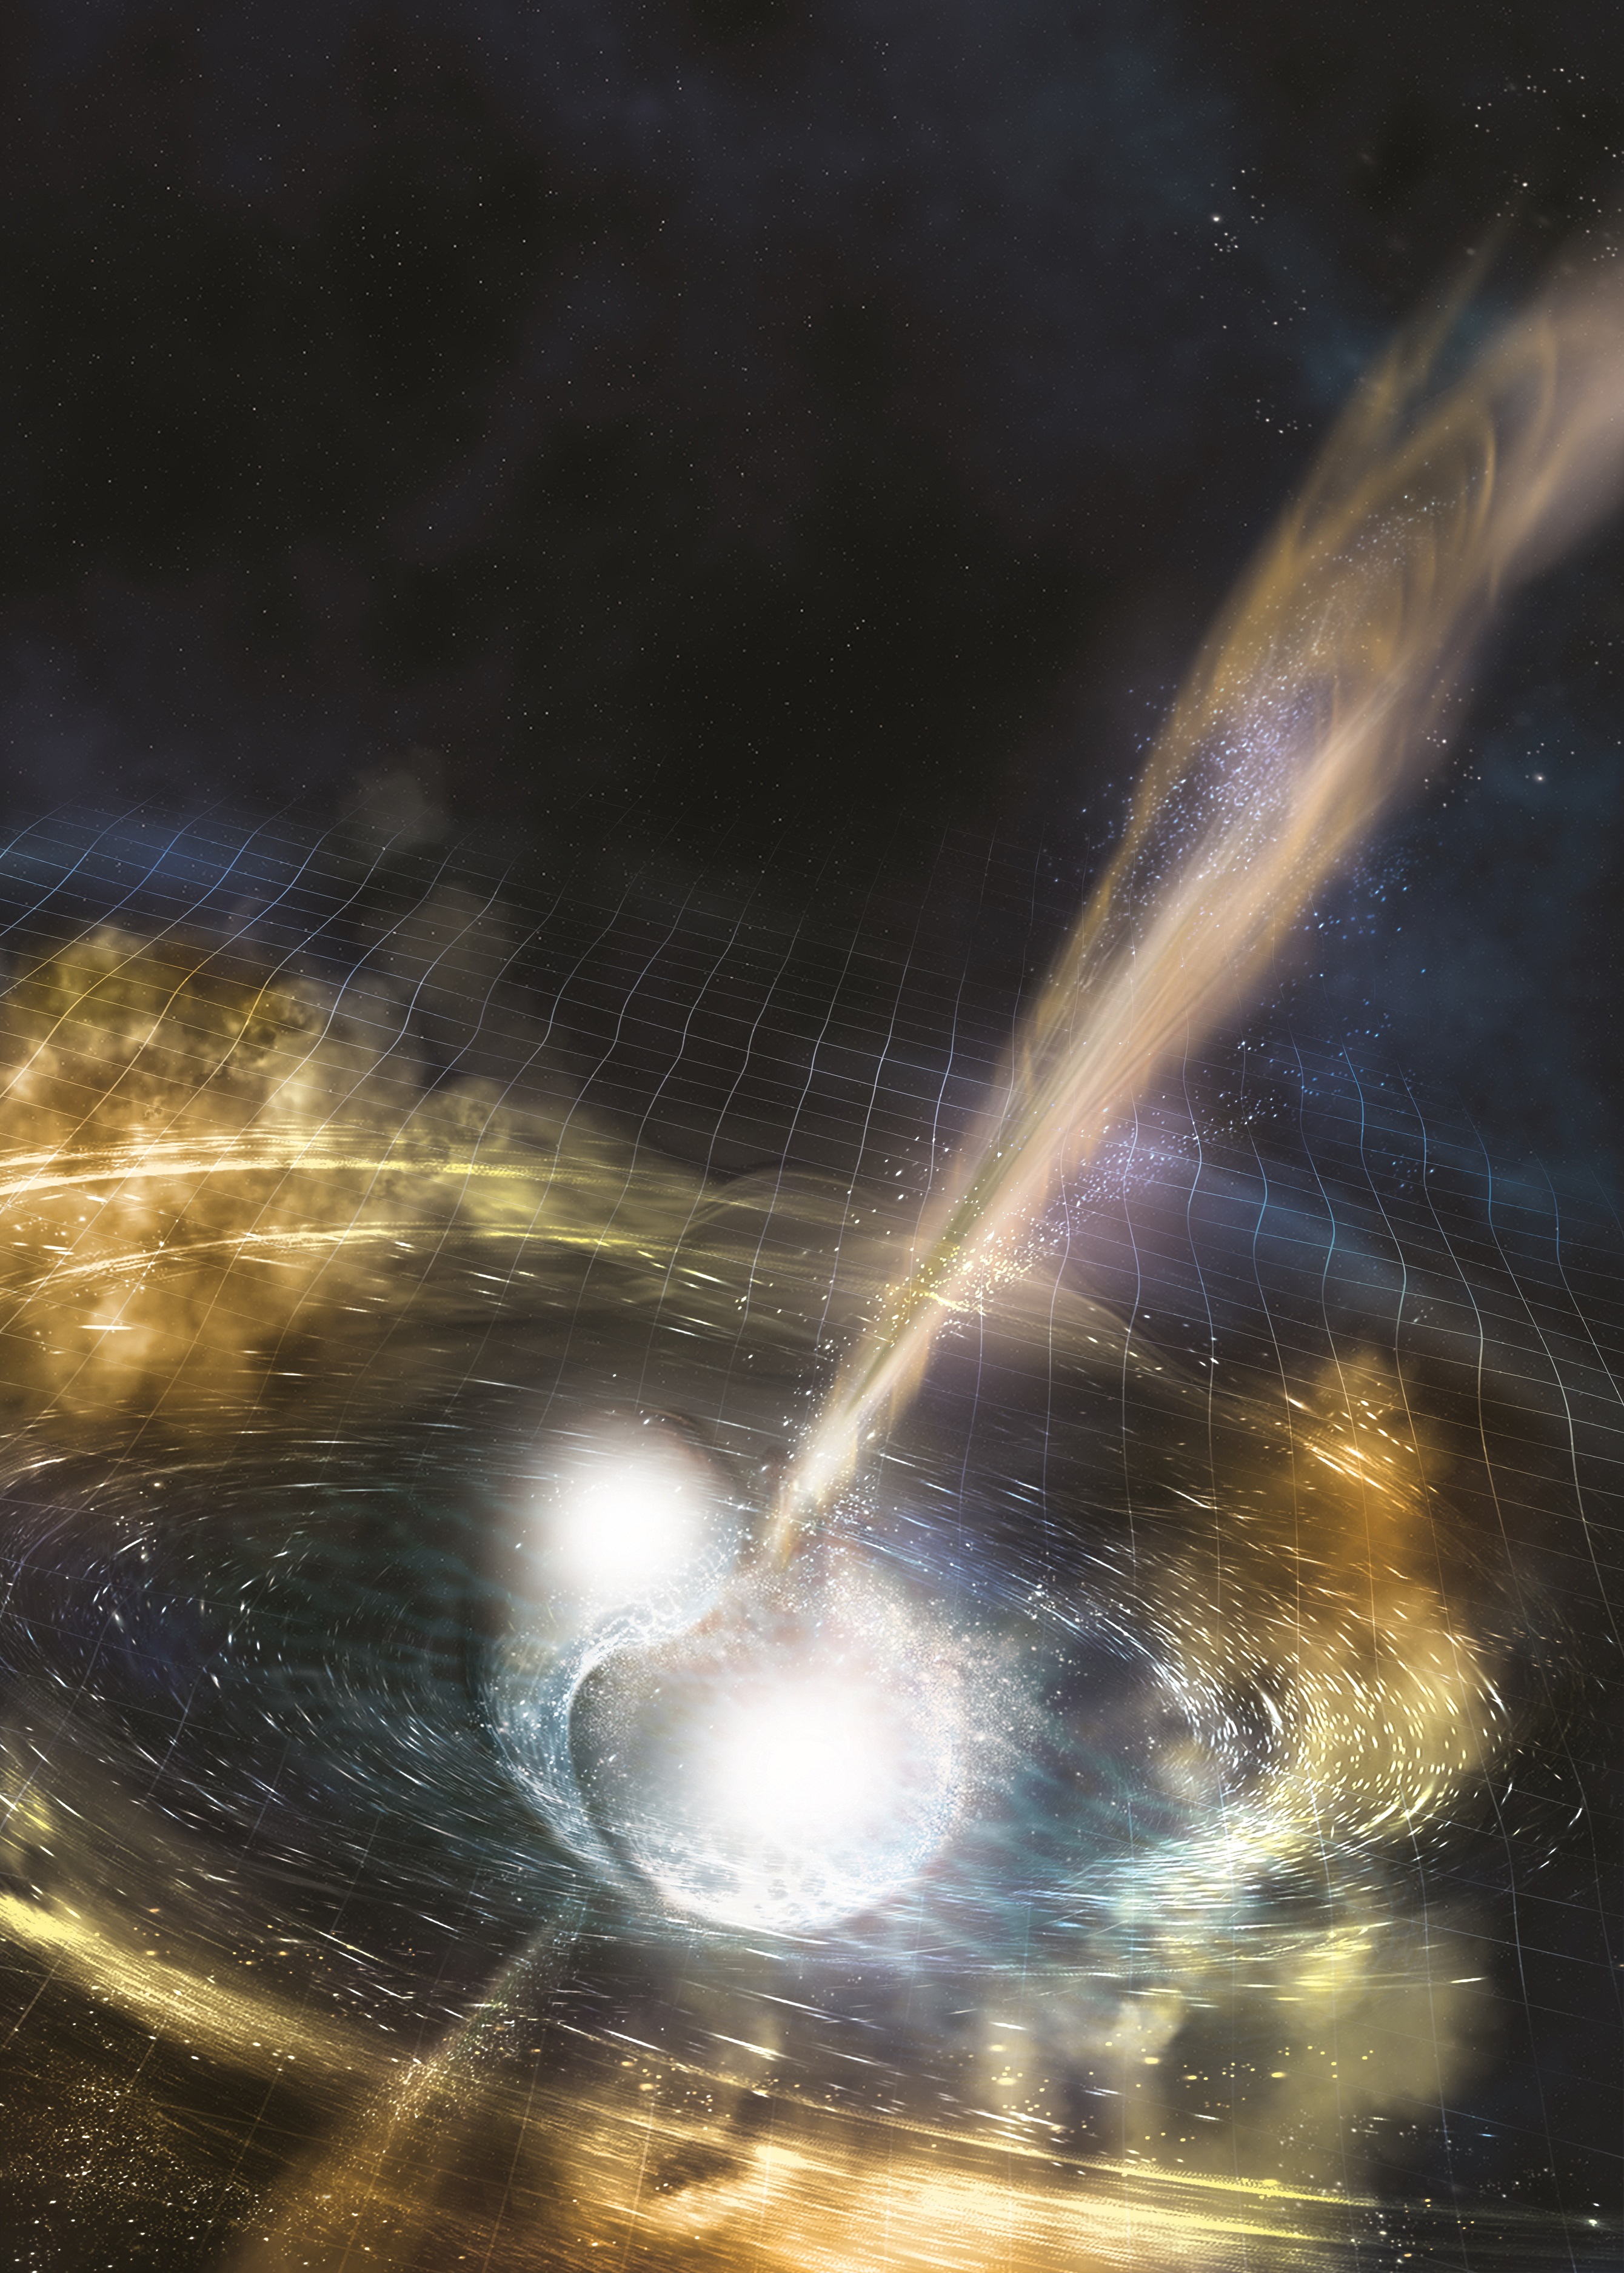 Neutron star illustration by A. Simonett, Sonoma State University